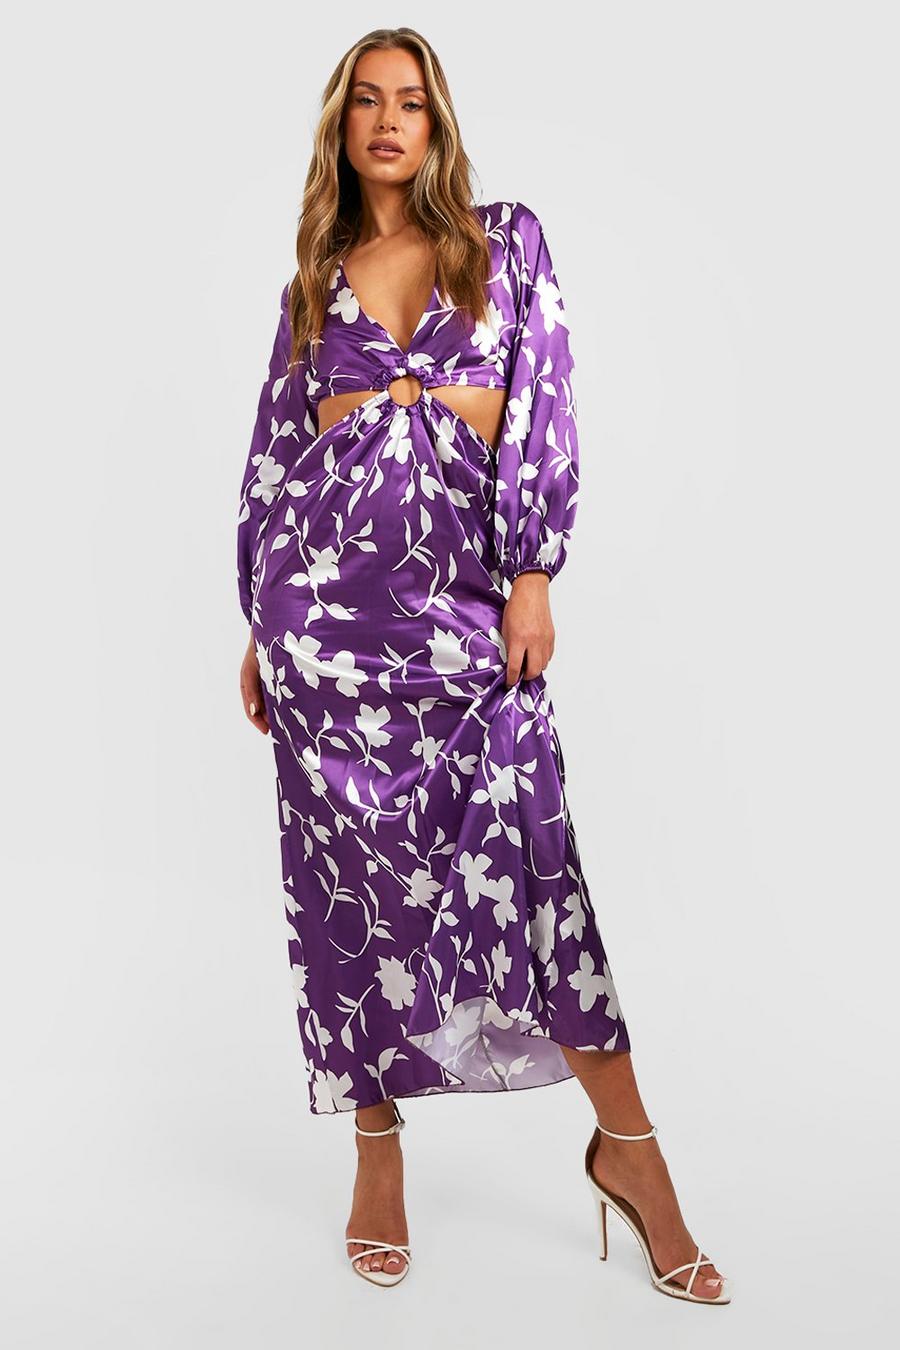 Jewel purple Floral Cut Out Maxi Dress image number 1